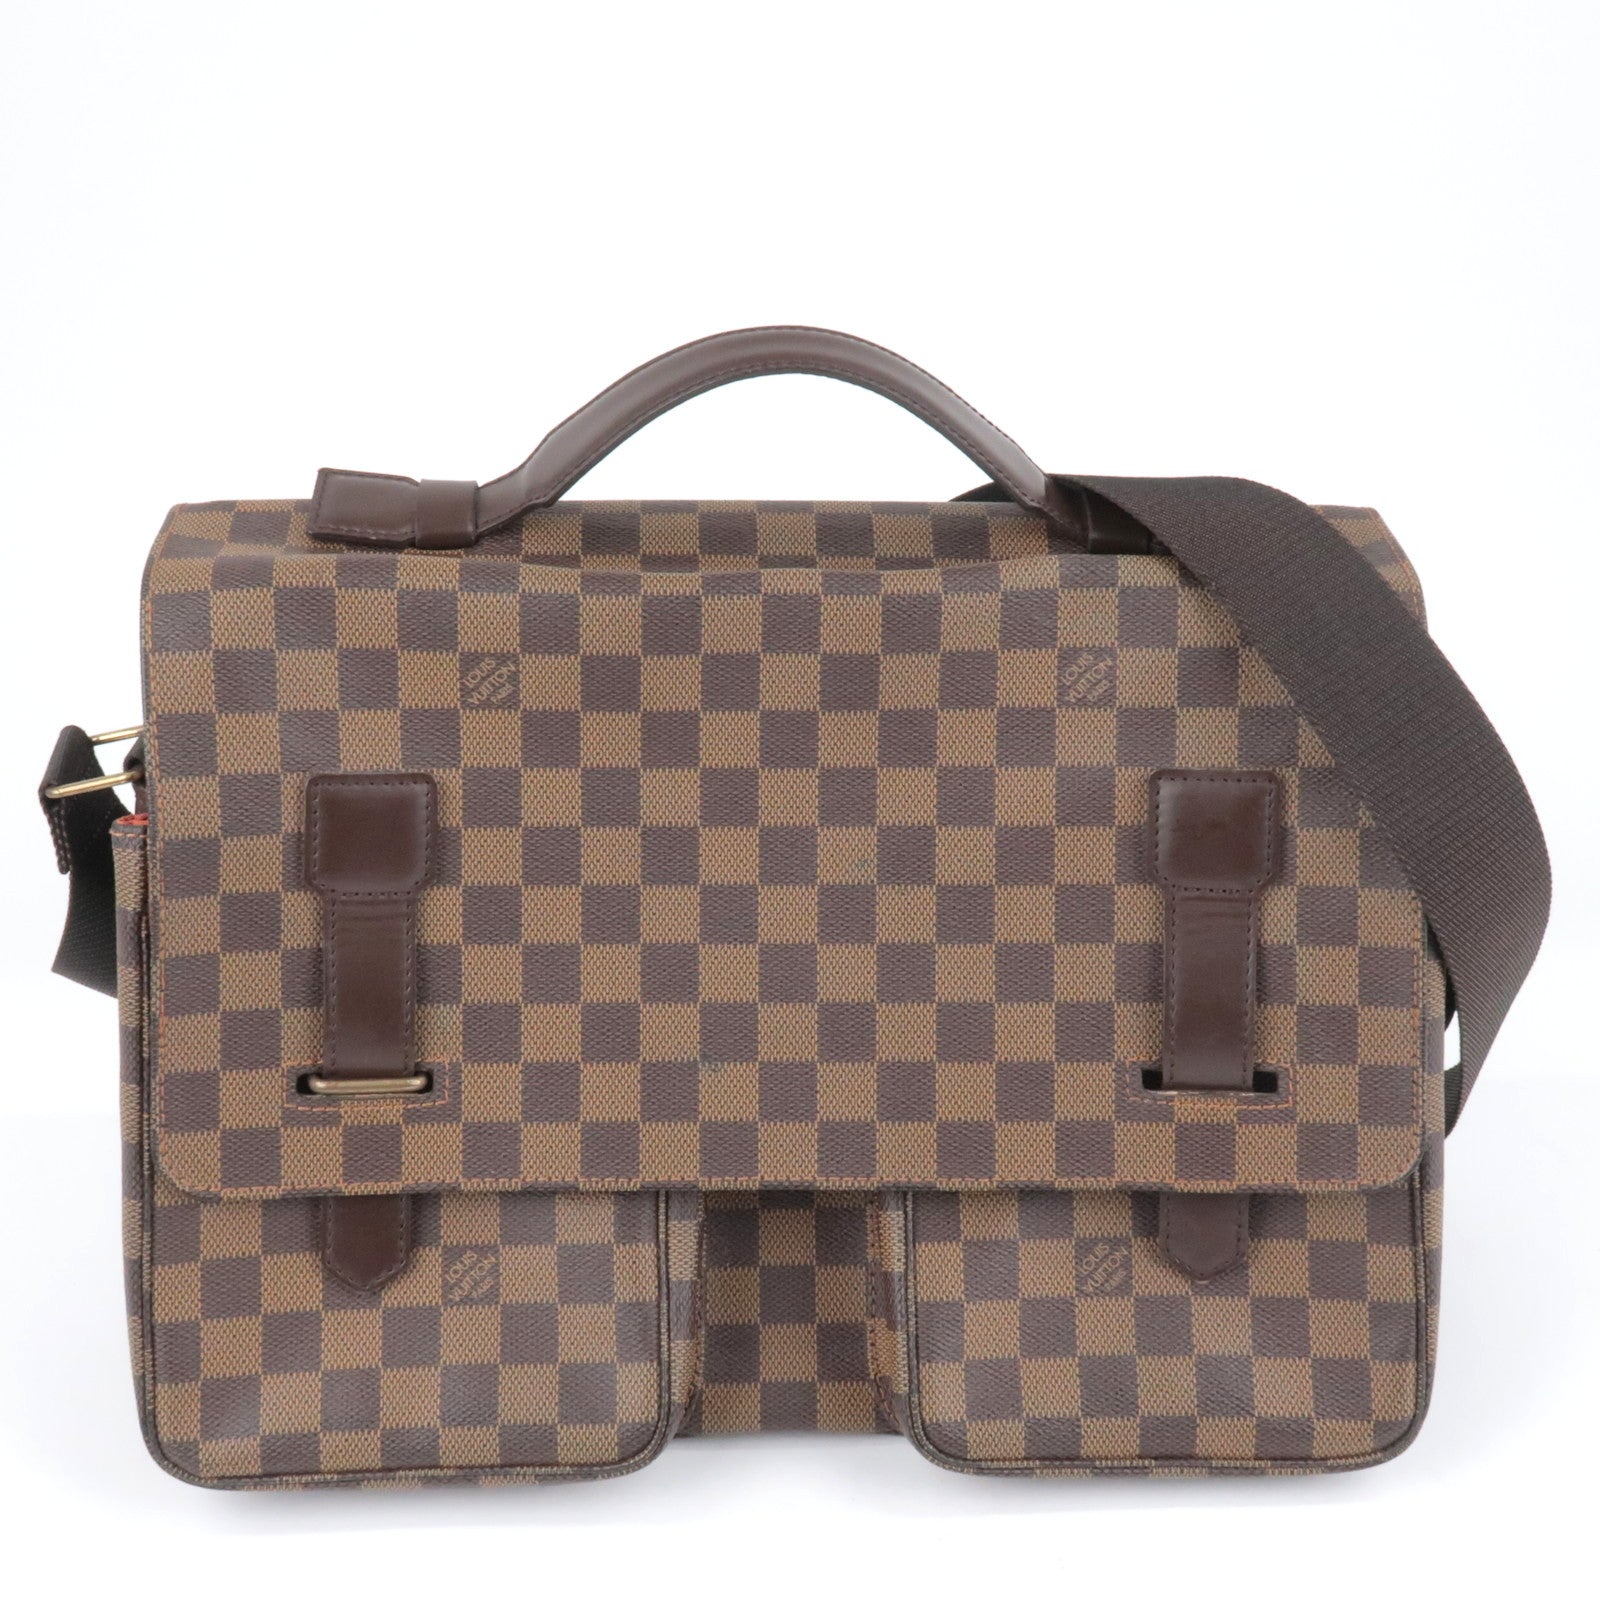 Louis Vuitton Damier Broadway Handbag N42270 Brown PVC Leather